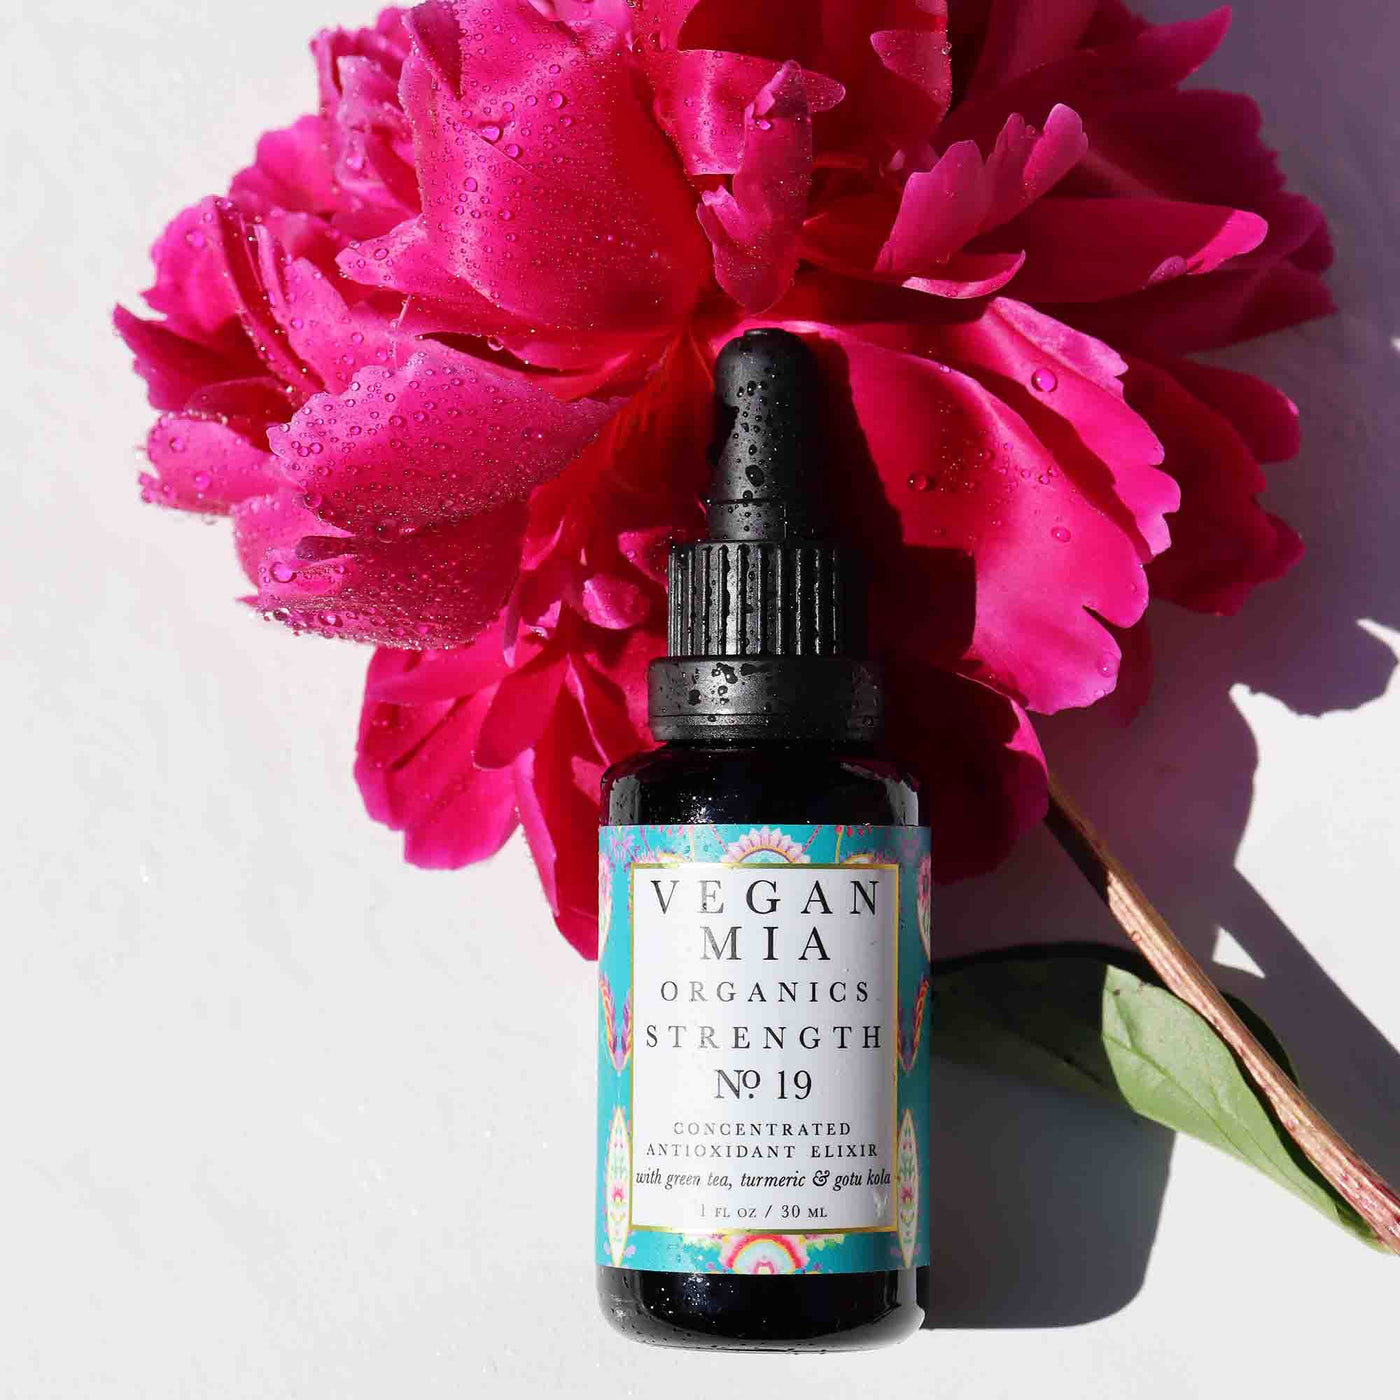 Vegan Mia Organics Strength Antioxidant and Superfood Elixir with Pink Peony